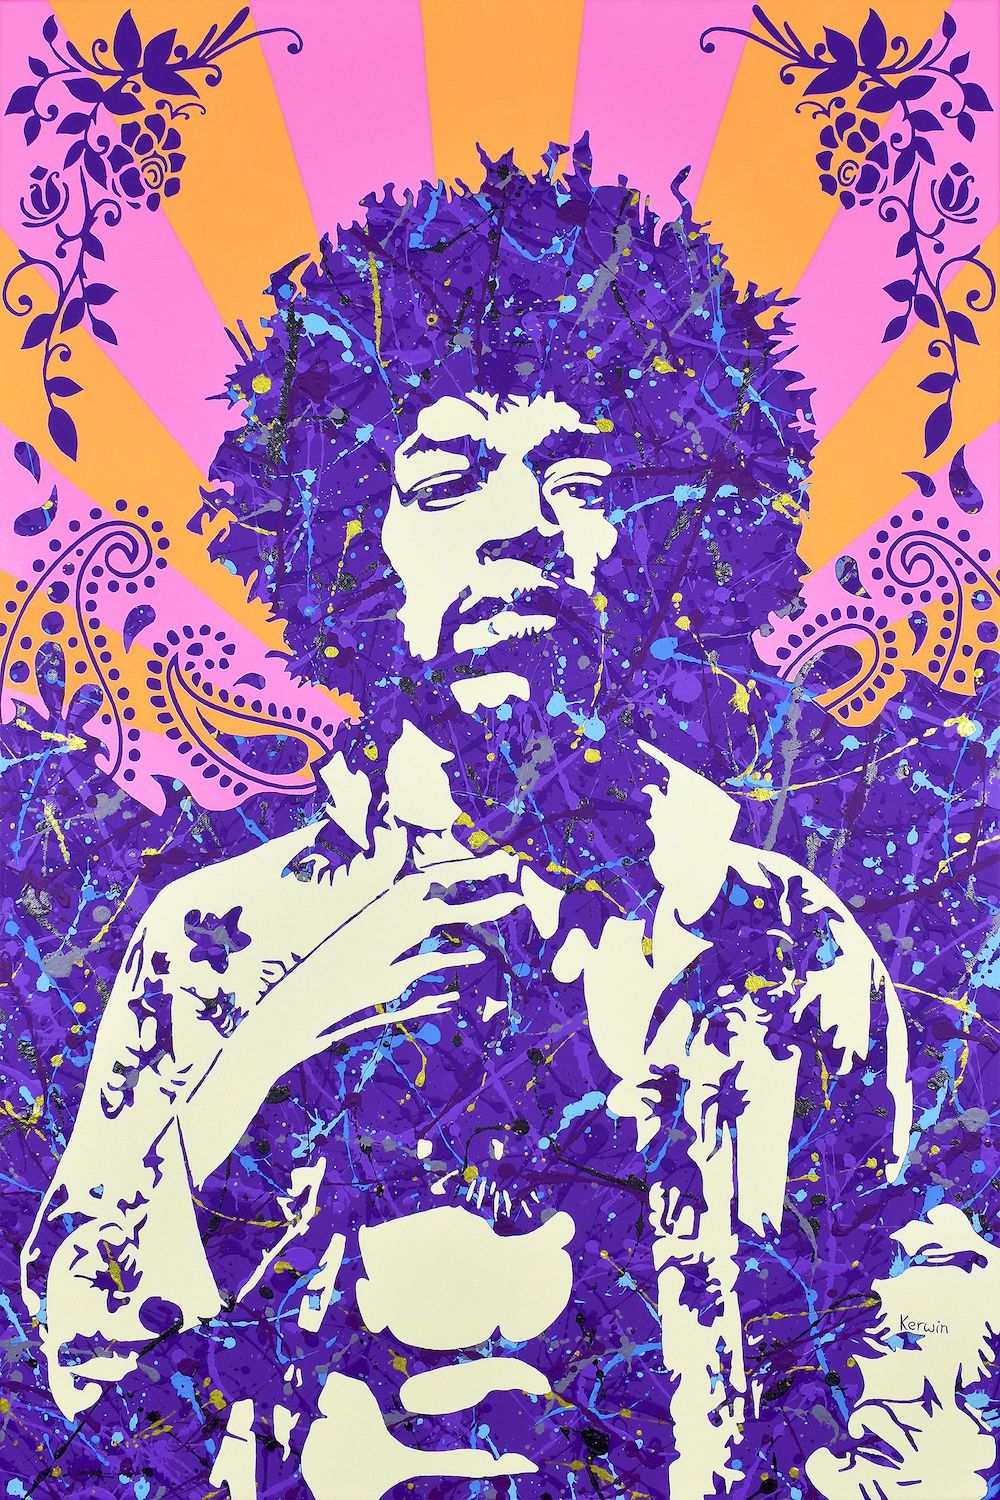 Jimi Hendrix pop art painting prints | By Kerwin